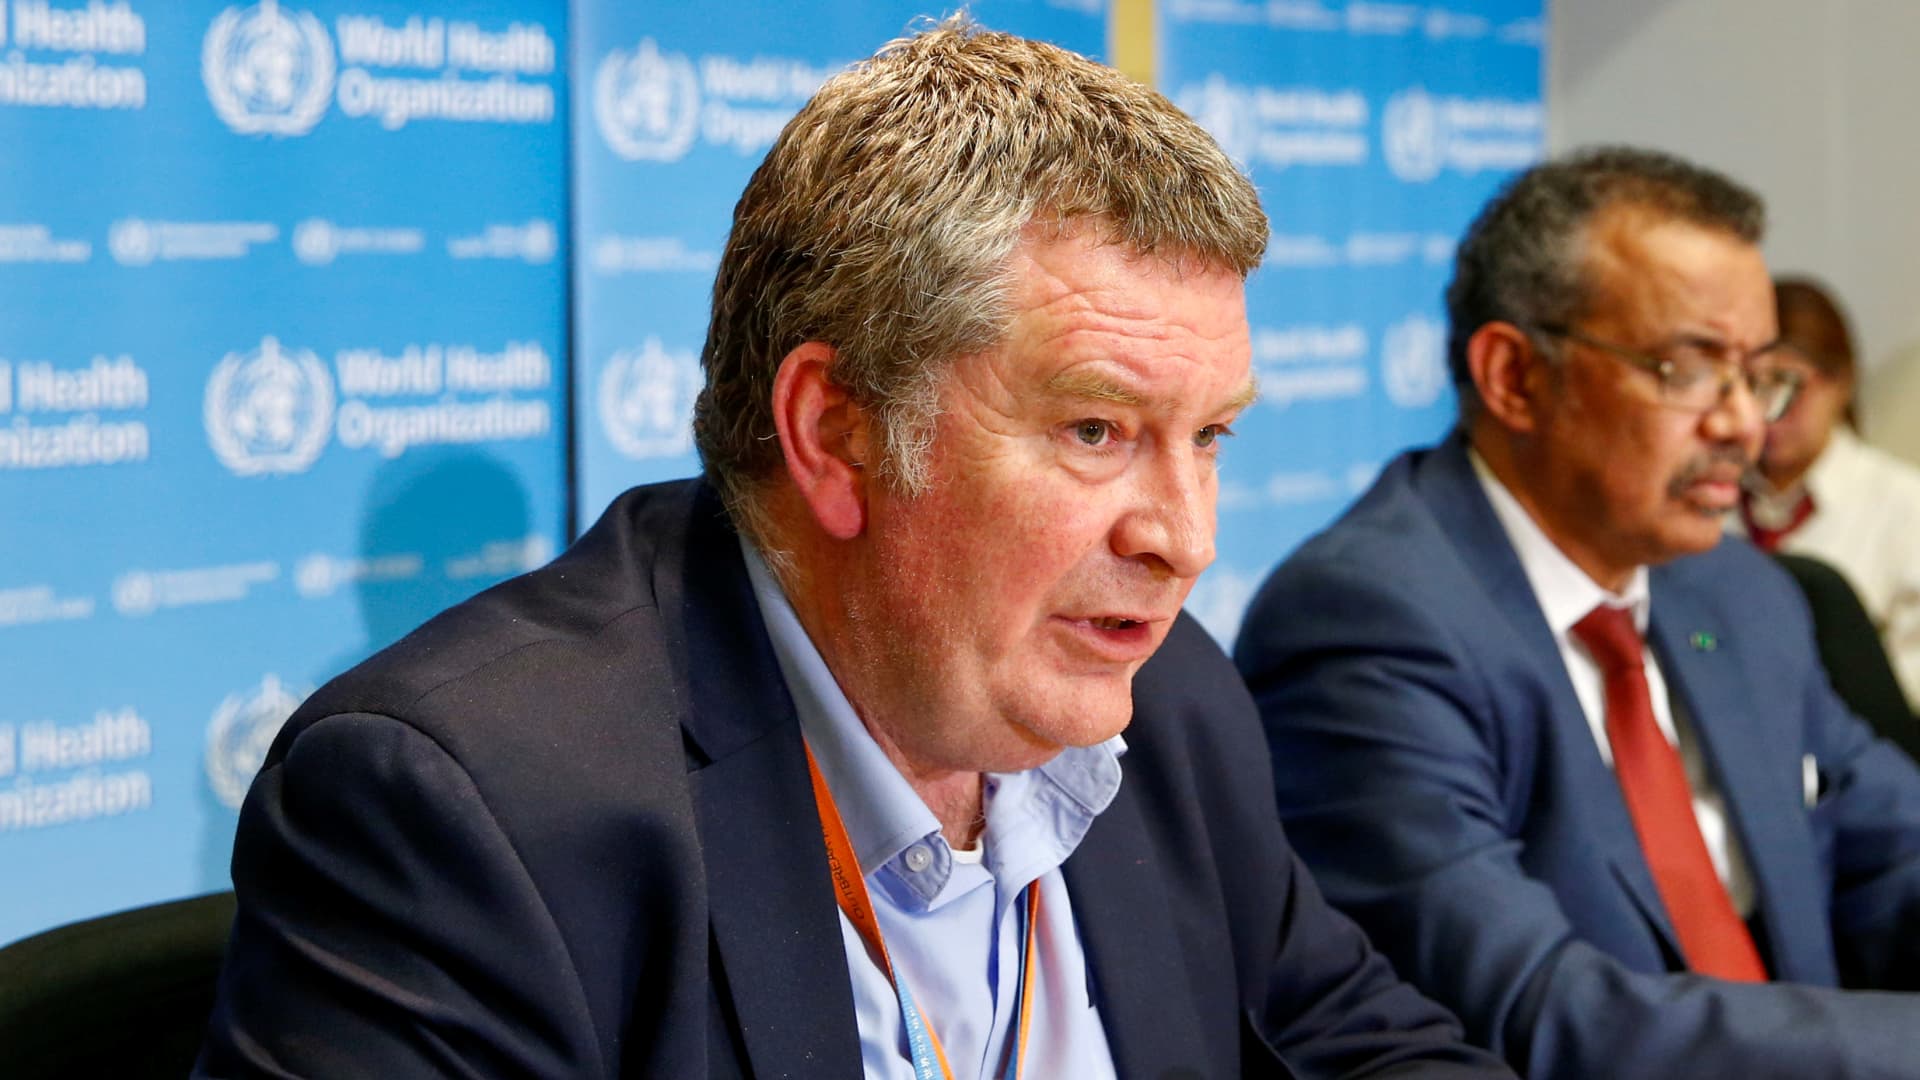 Executive Director of the World Health Organization's (WHO) emergencies program Mike Ryan speaks at a news conference on the novel coronavirus (2019-nCoV) in Geneva, Switzerland.